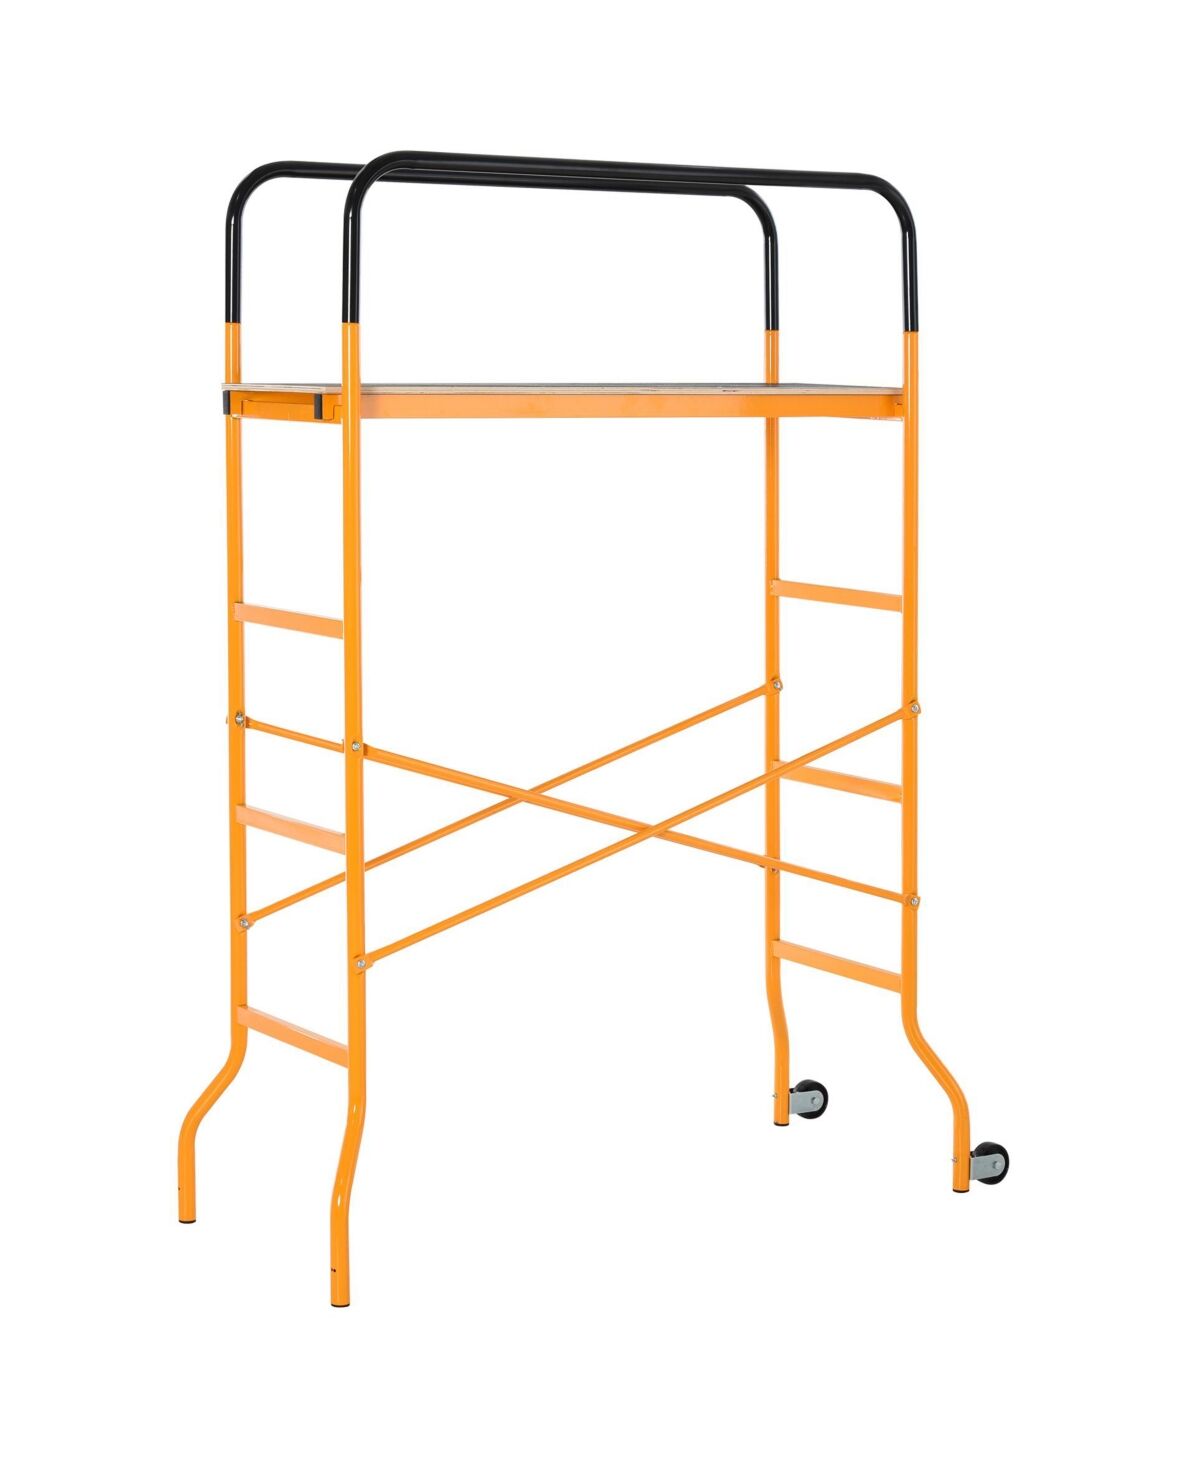 Homcom Steel Work Platform 4-Step Ladder Indoor Decoration w/2 Wheels - Black